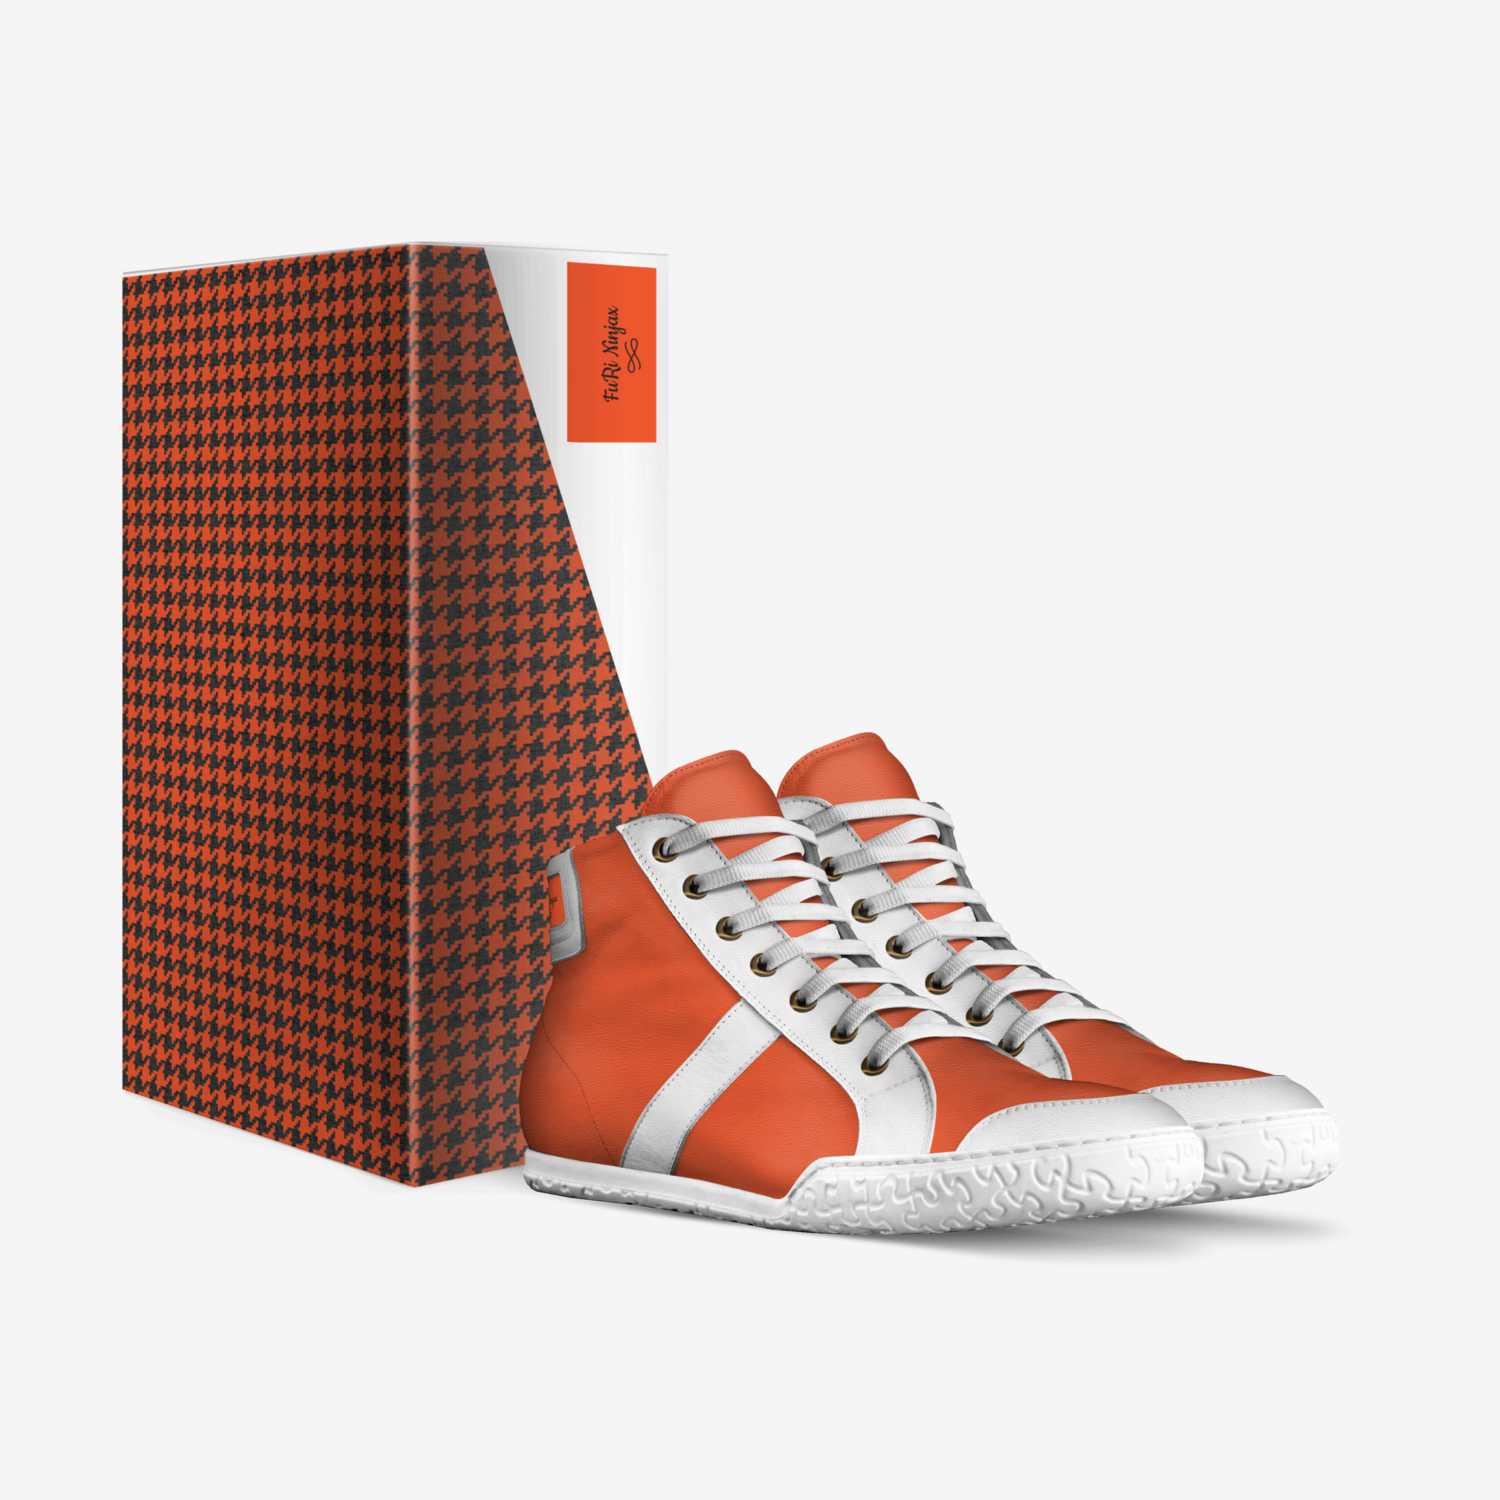 FuRi Ninjax custom made in Italy shoes by Thomas Michael Loader | Box view